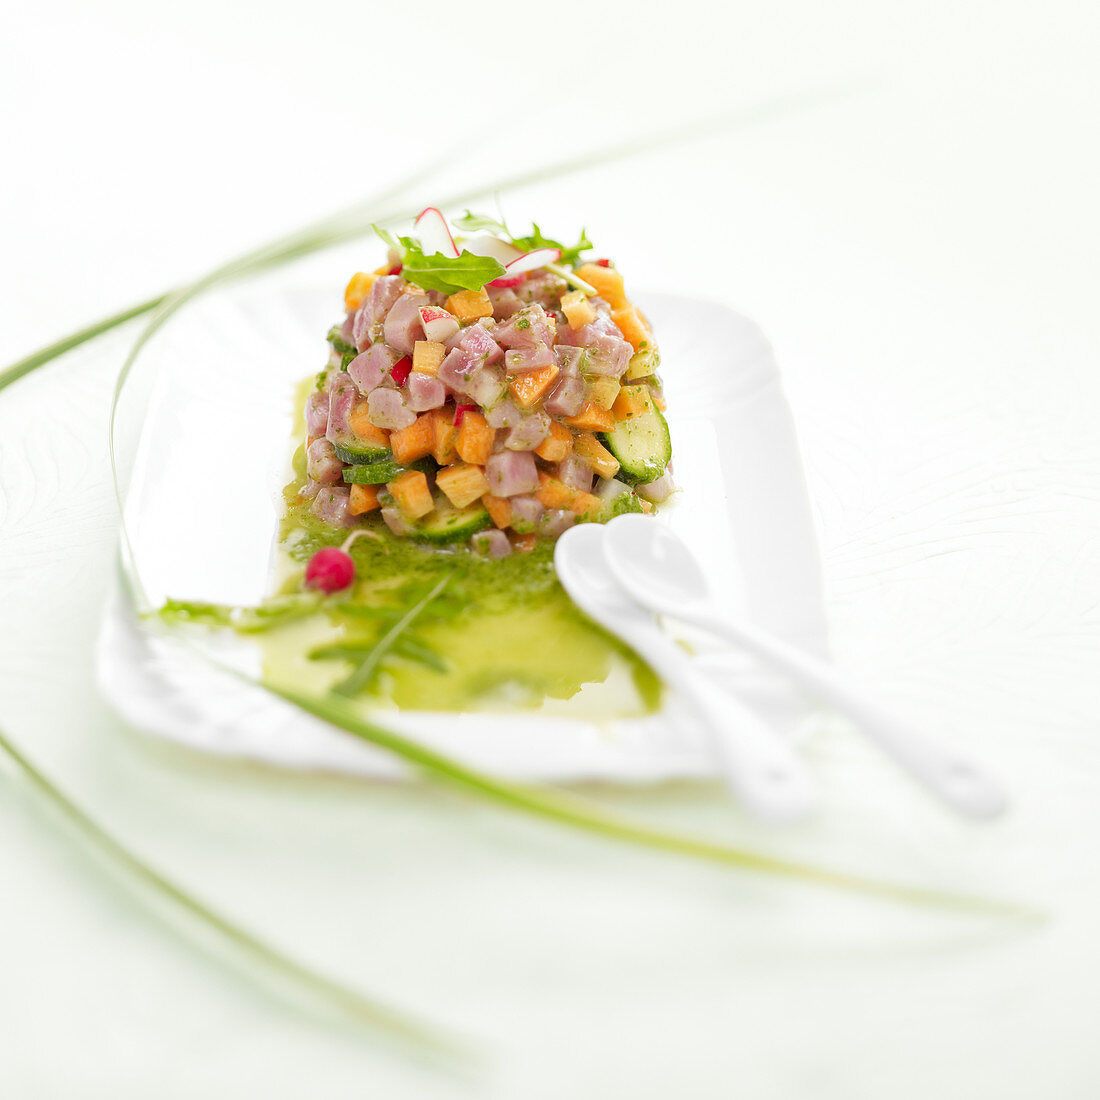 Tuna and vegetable tartare